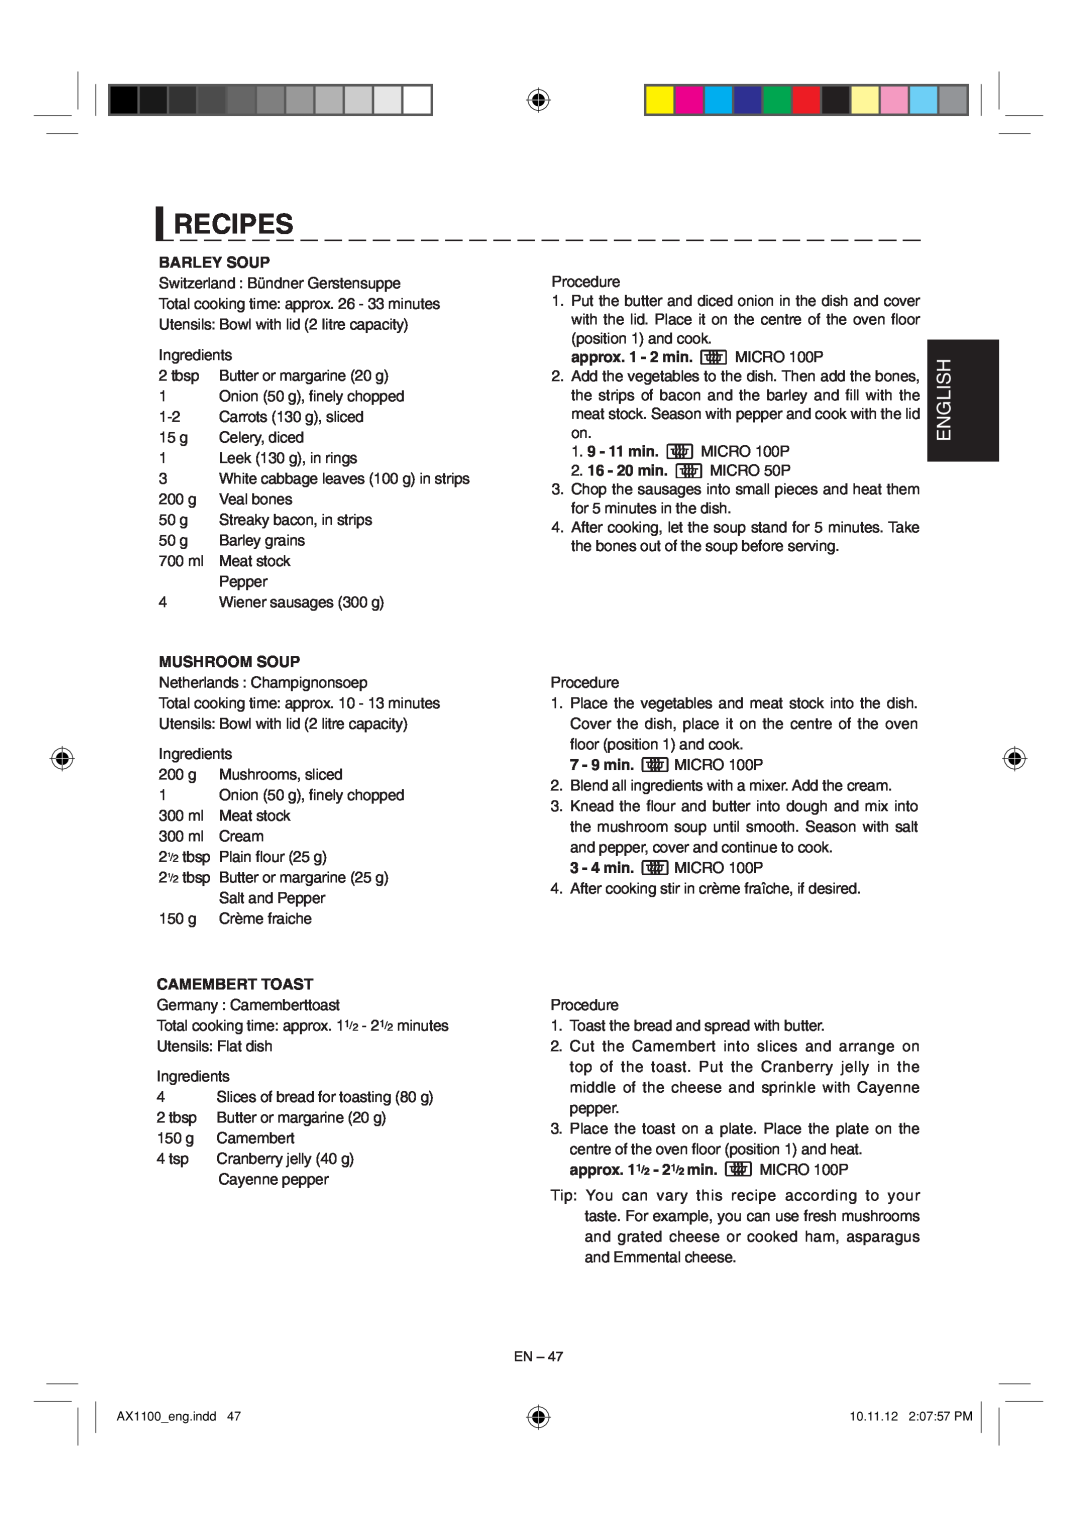 Sharp AX-1100 operation manual Recipes, English, Barley Soup, approx. 1 - 2 min. MICRO 100P, Mushroom Soup, Camembert Toast 